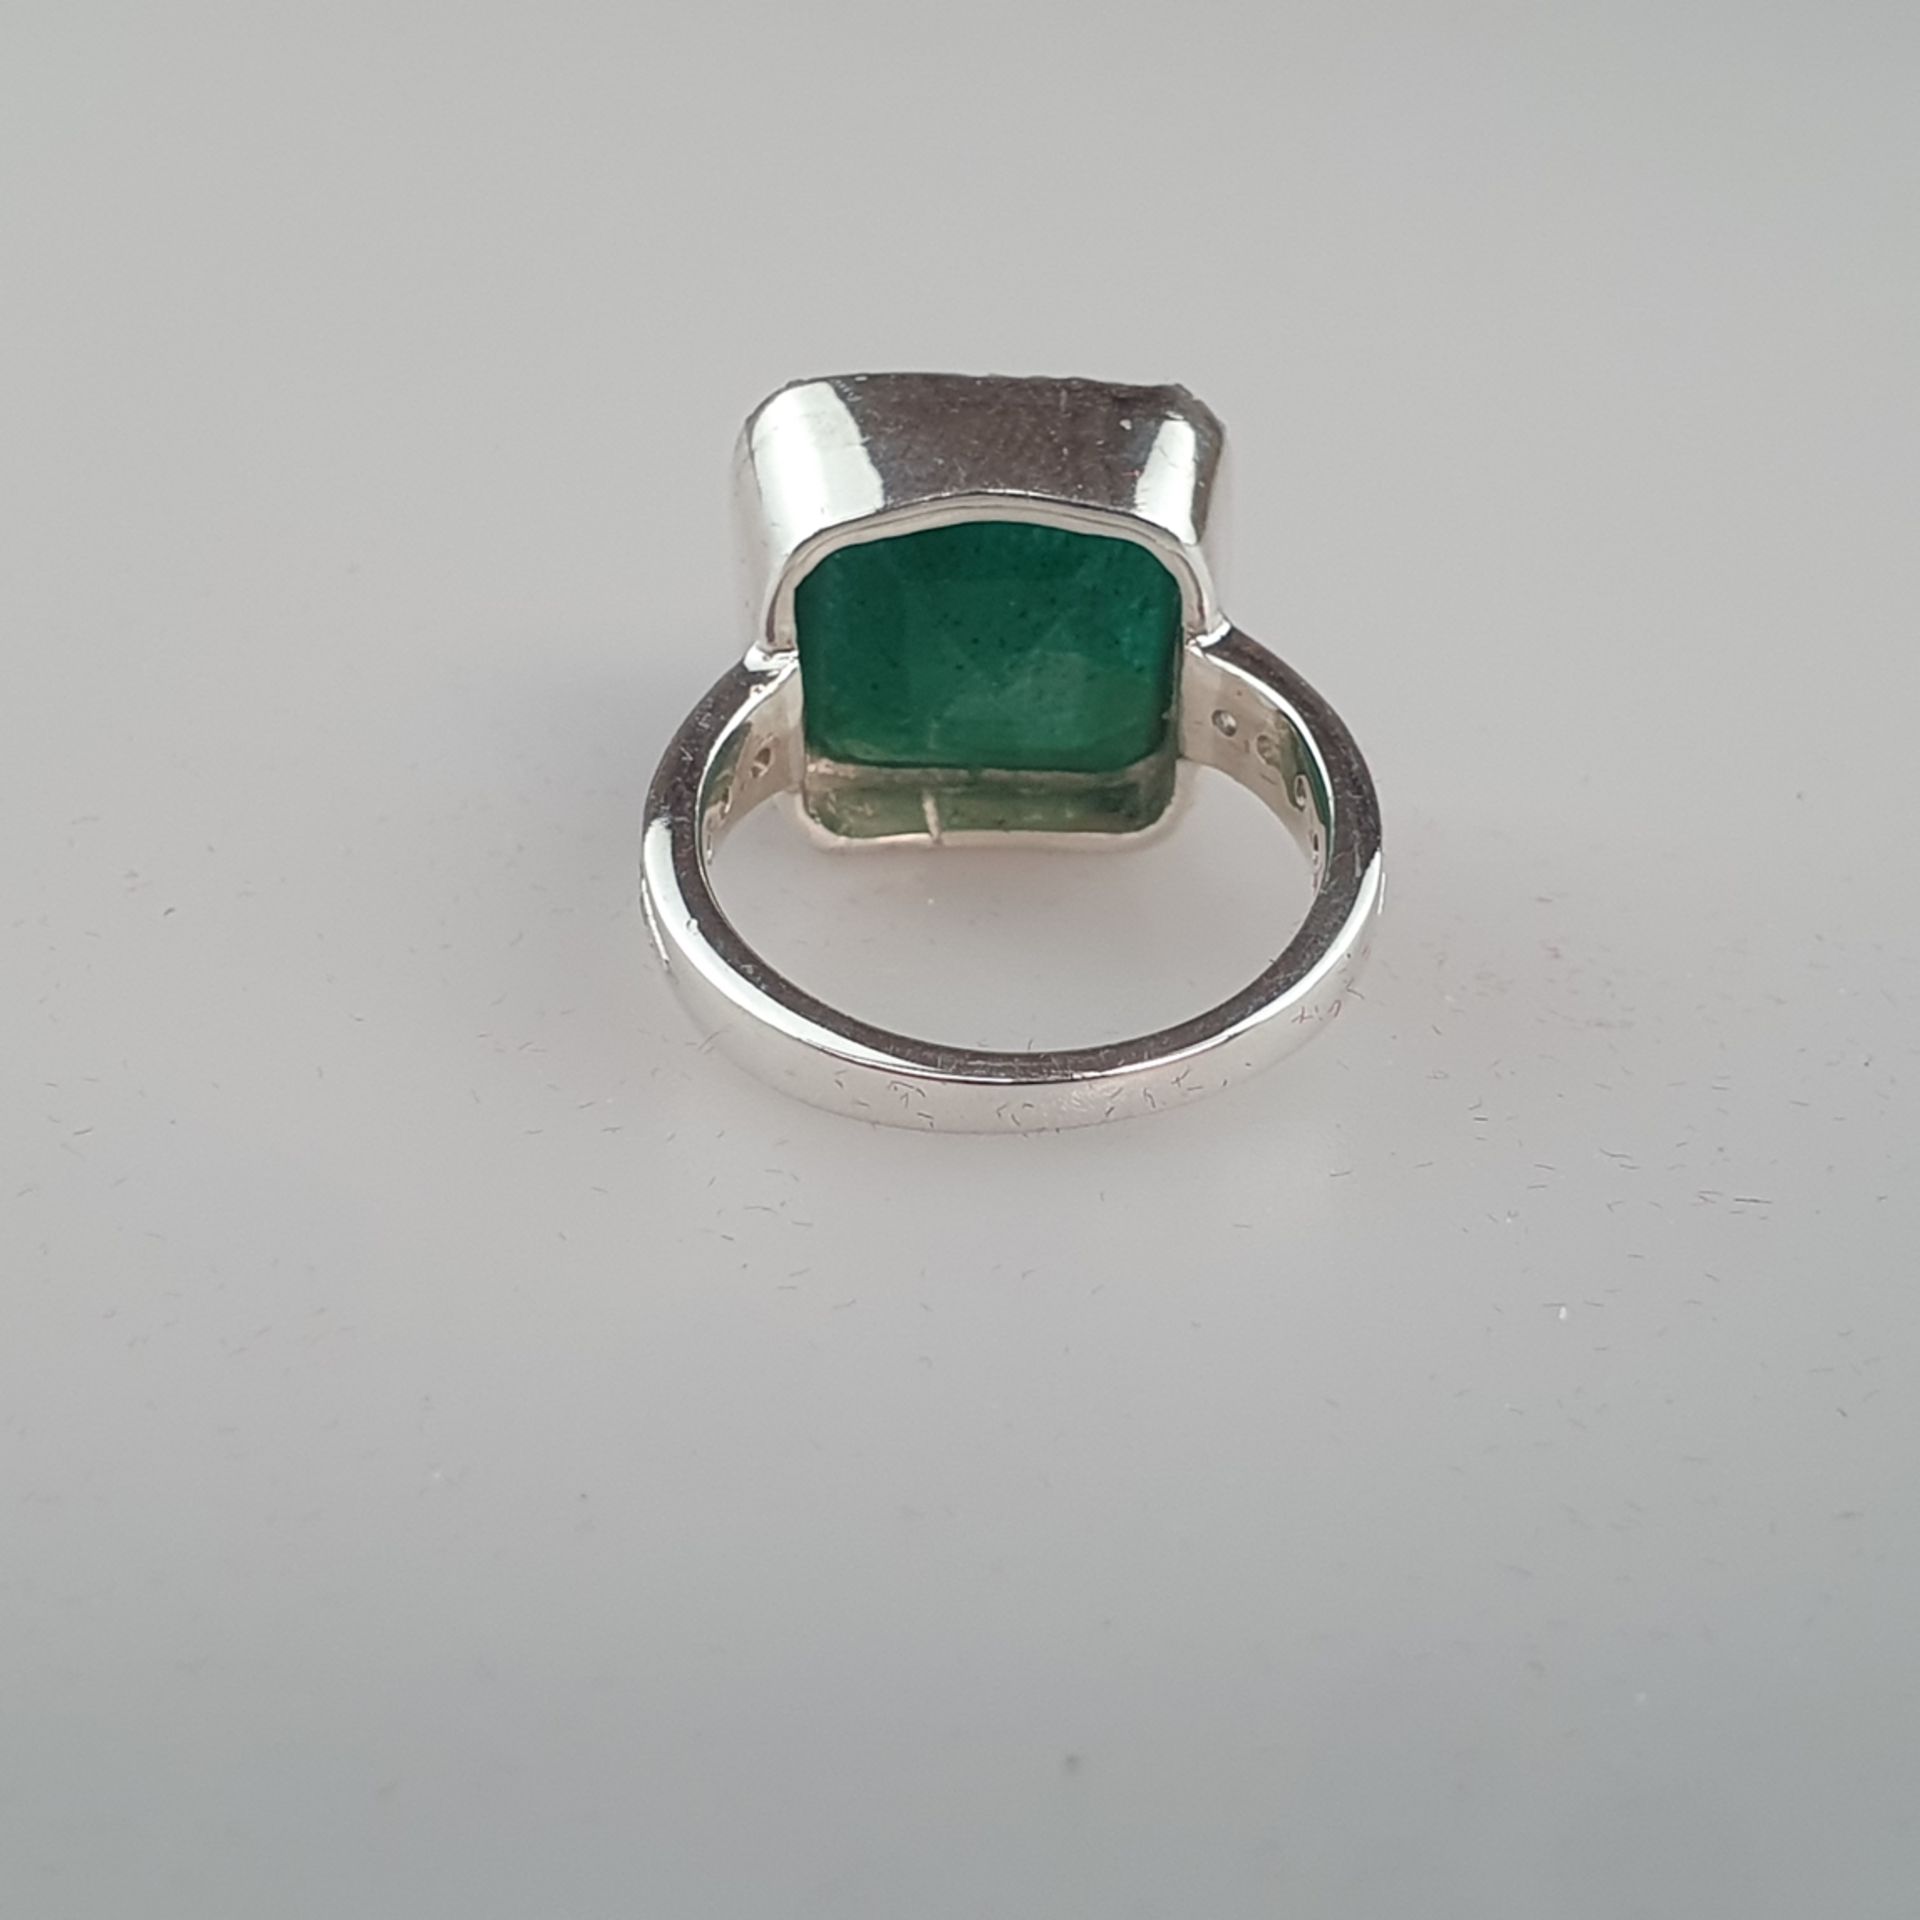 Silberring mit Smaragd - Sterling Silber, gestempelt, rechteckiger Ringkopf besetzt mit Smaragd im - Image 5 of 9